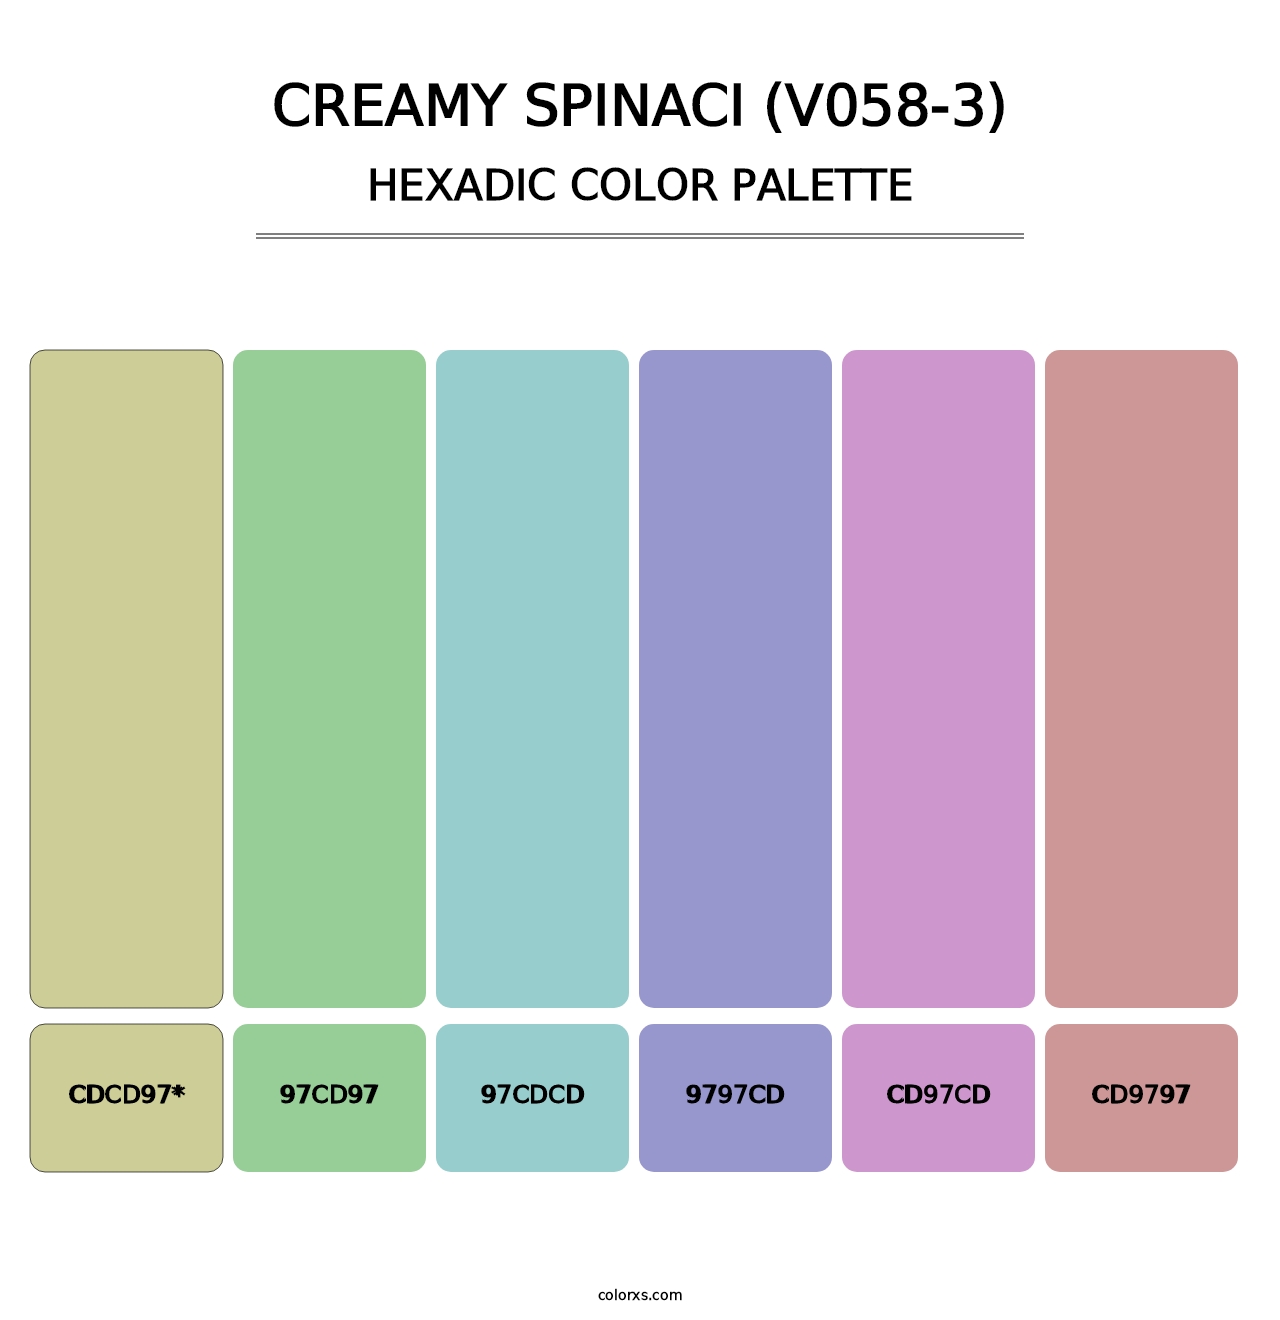 Creamy Spinaci (V058-3) - Hexadic Color Palette